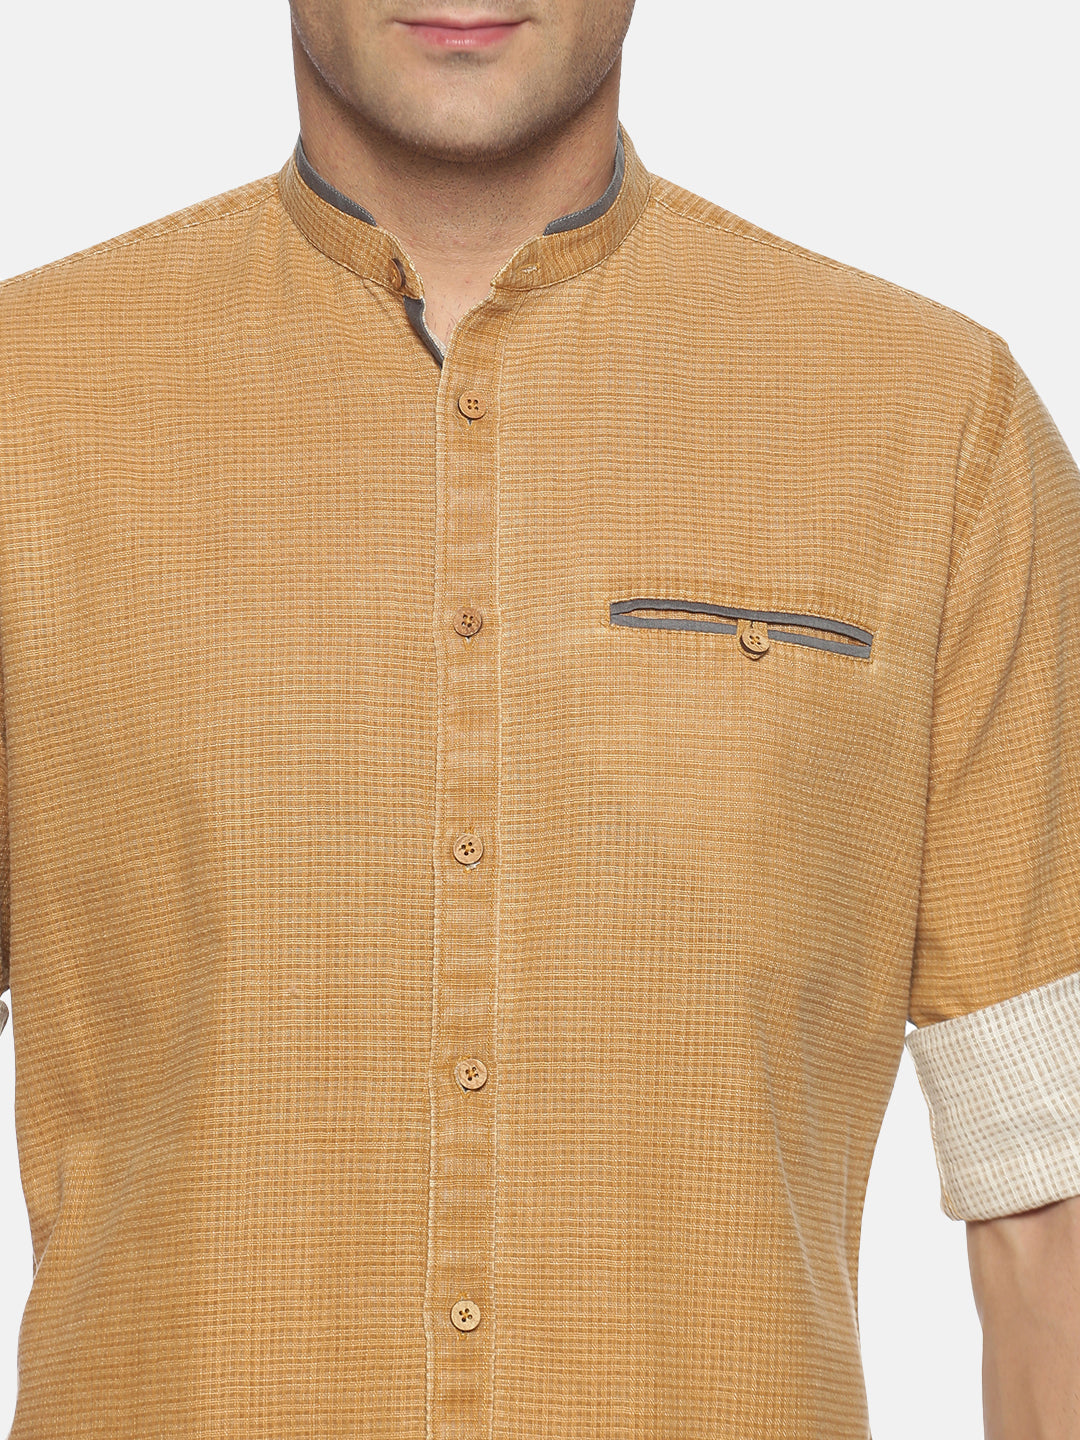 Don Vino Men's Khaki Texture Full Sleeve Casual Shirt